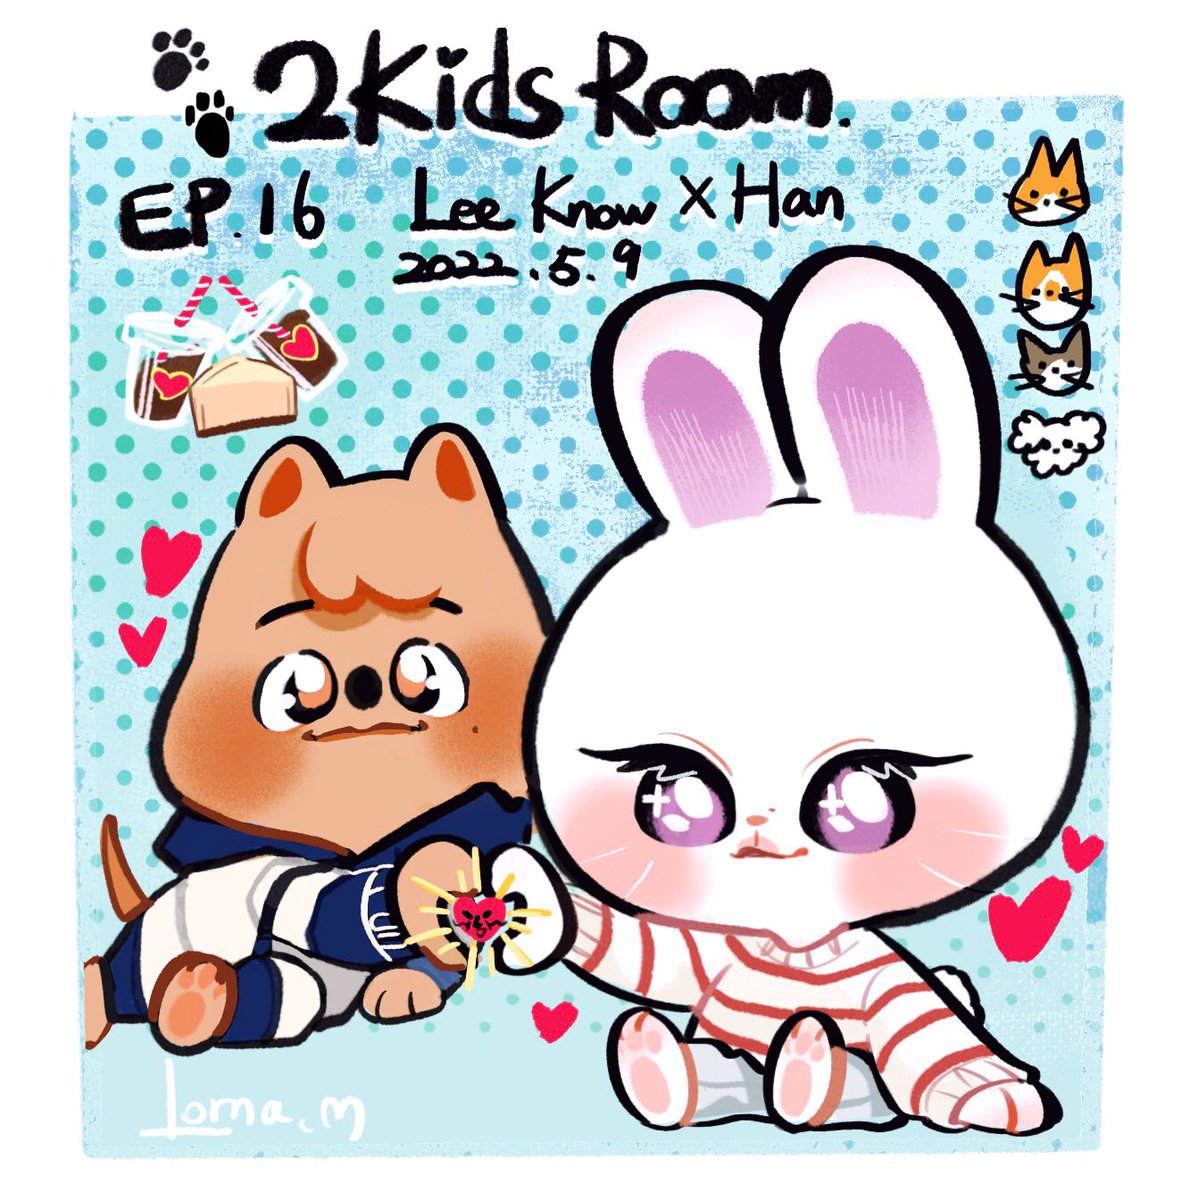 2kids room ep.16 🥤🍰💖
#straykids  #skzoo
#LeeKnow #HAN 